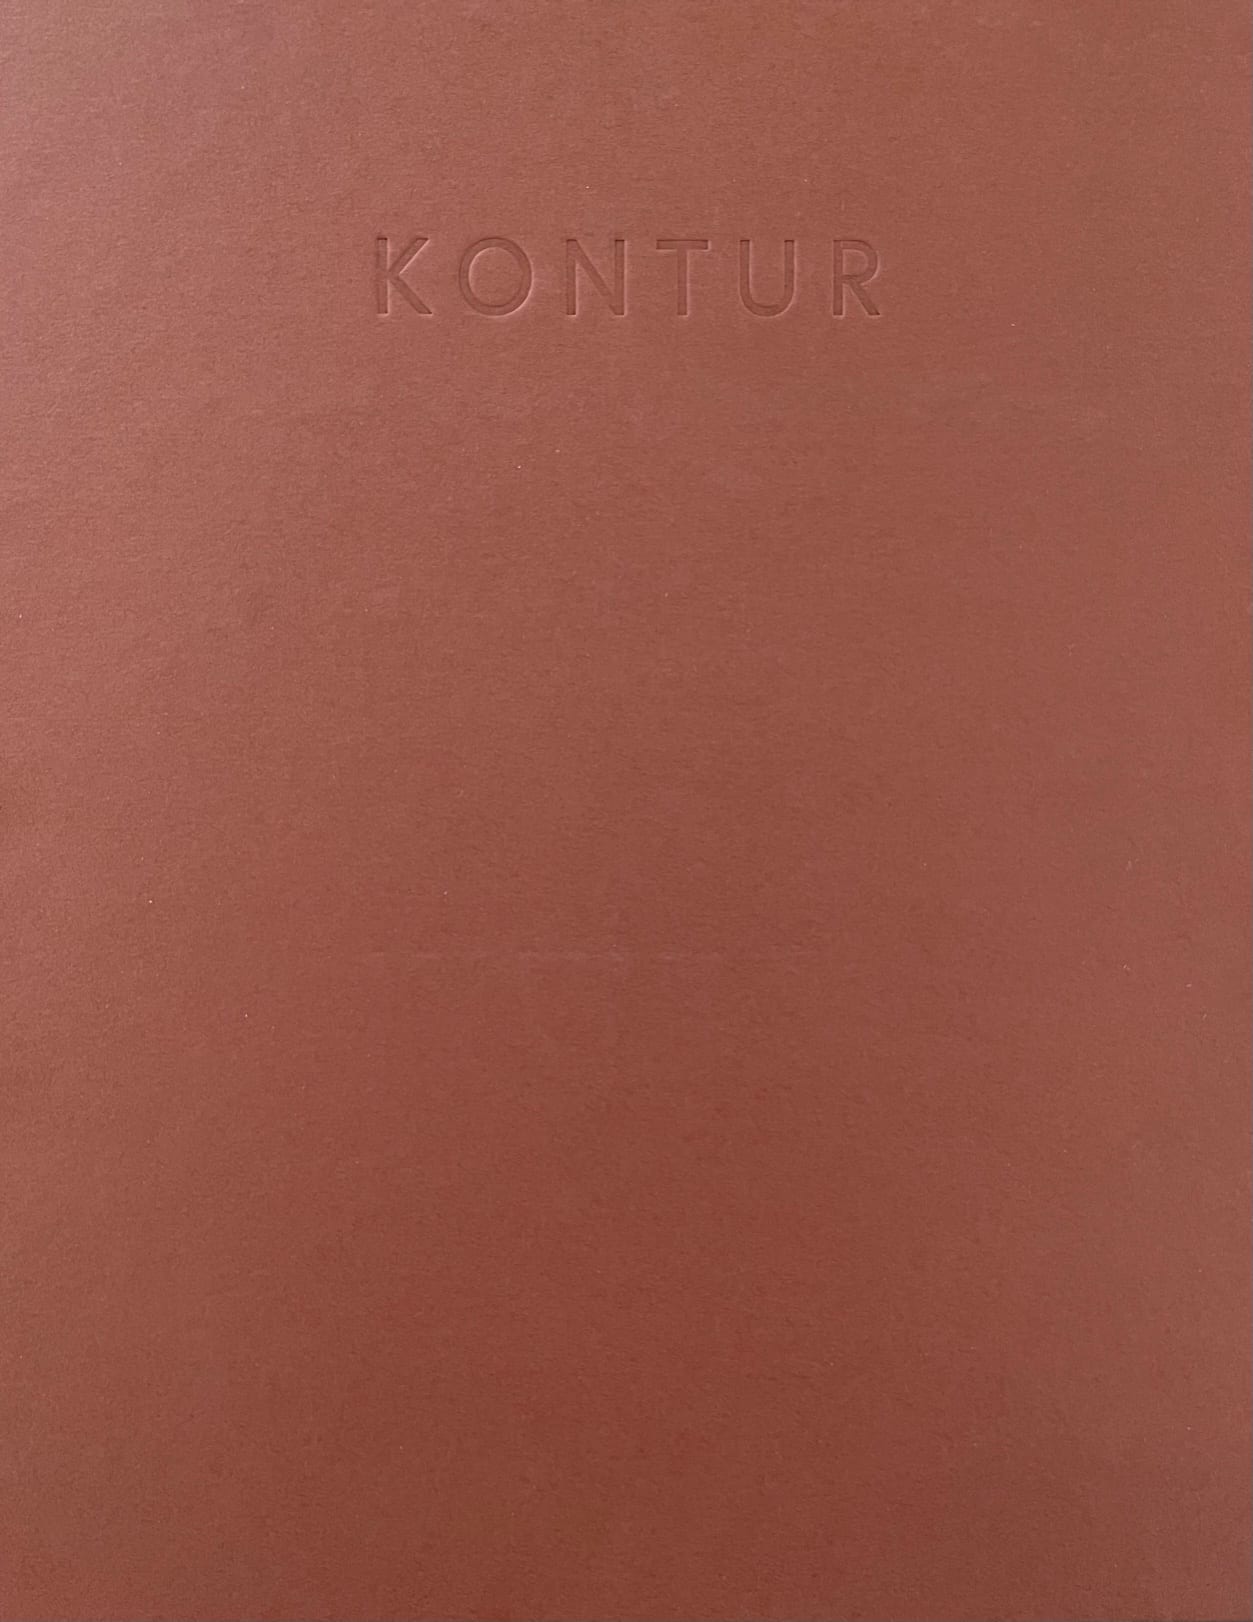 Kontur - Swedish